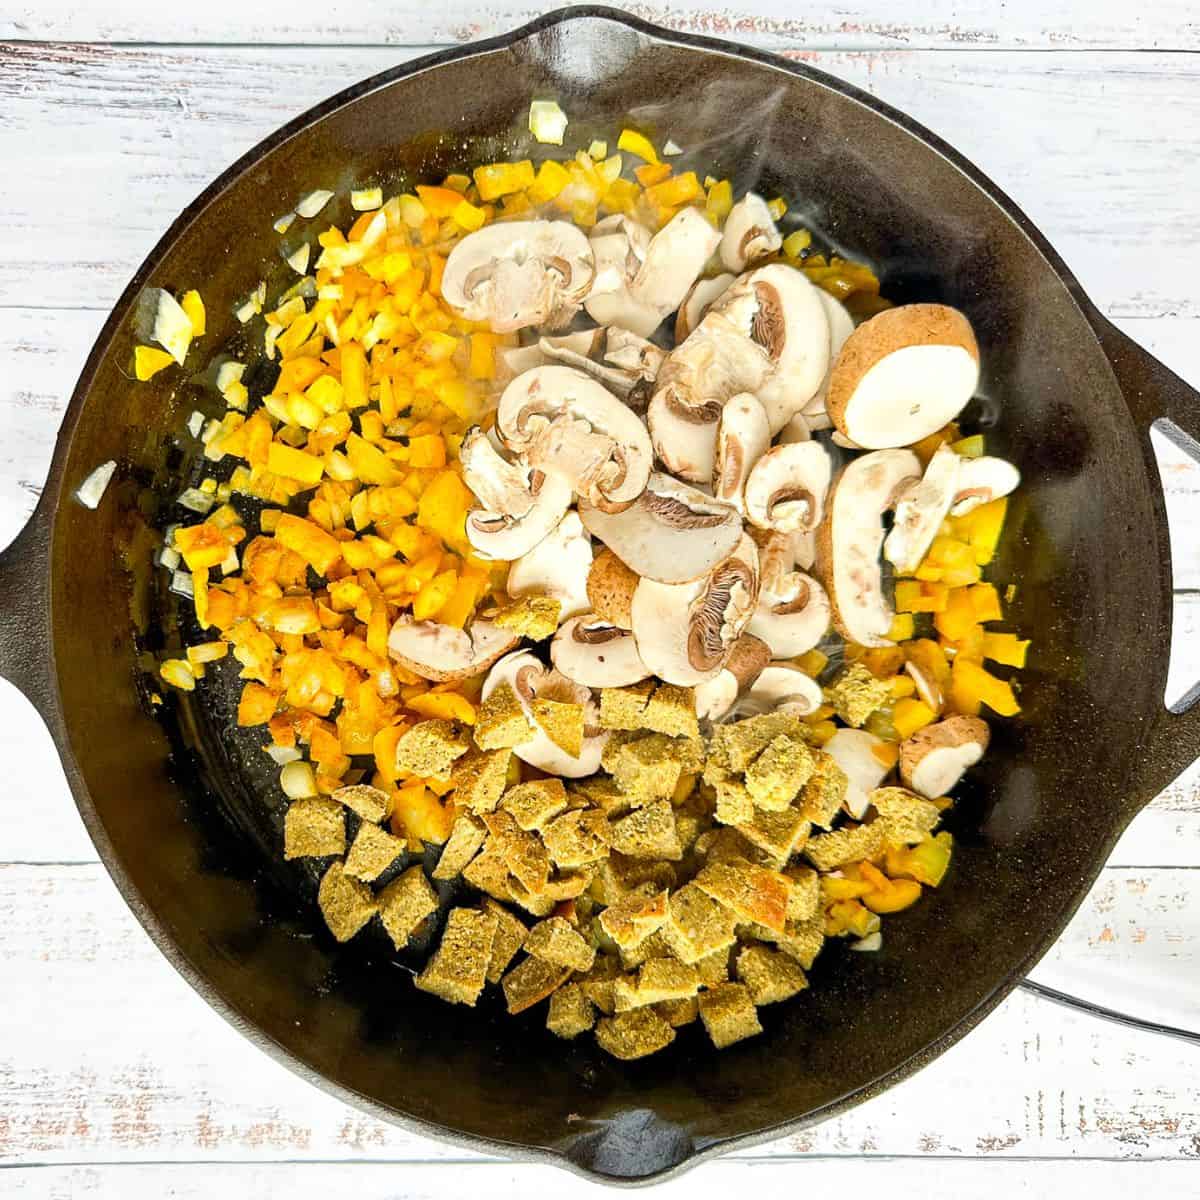 mushrooms and seitan added to tofu scramble in a cast iron pan